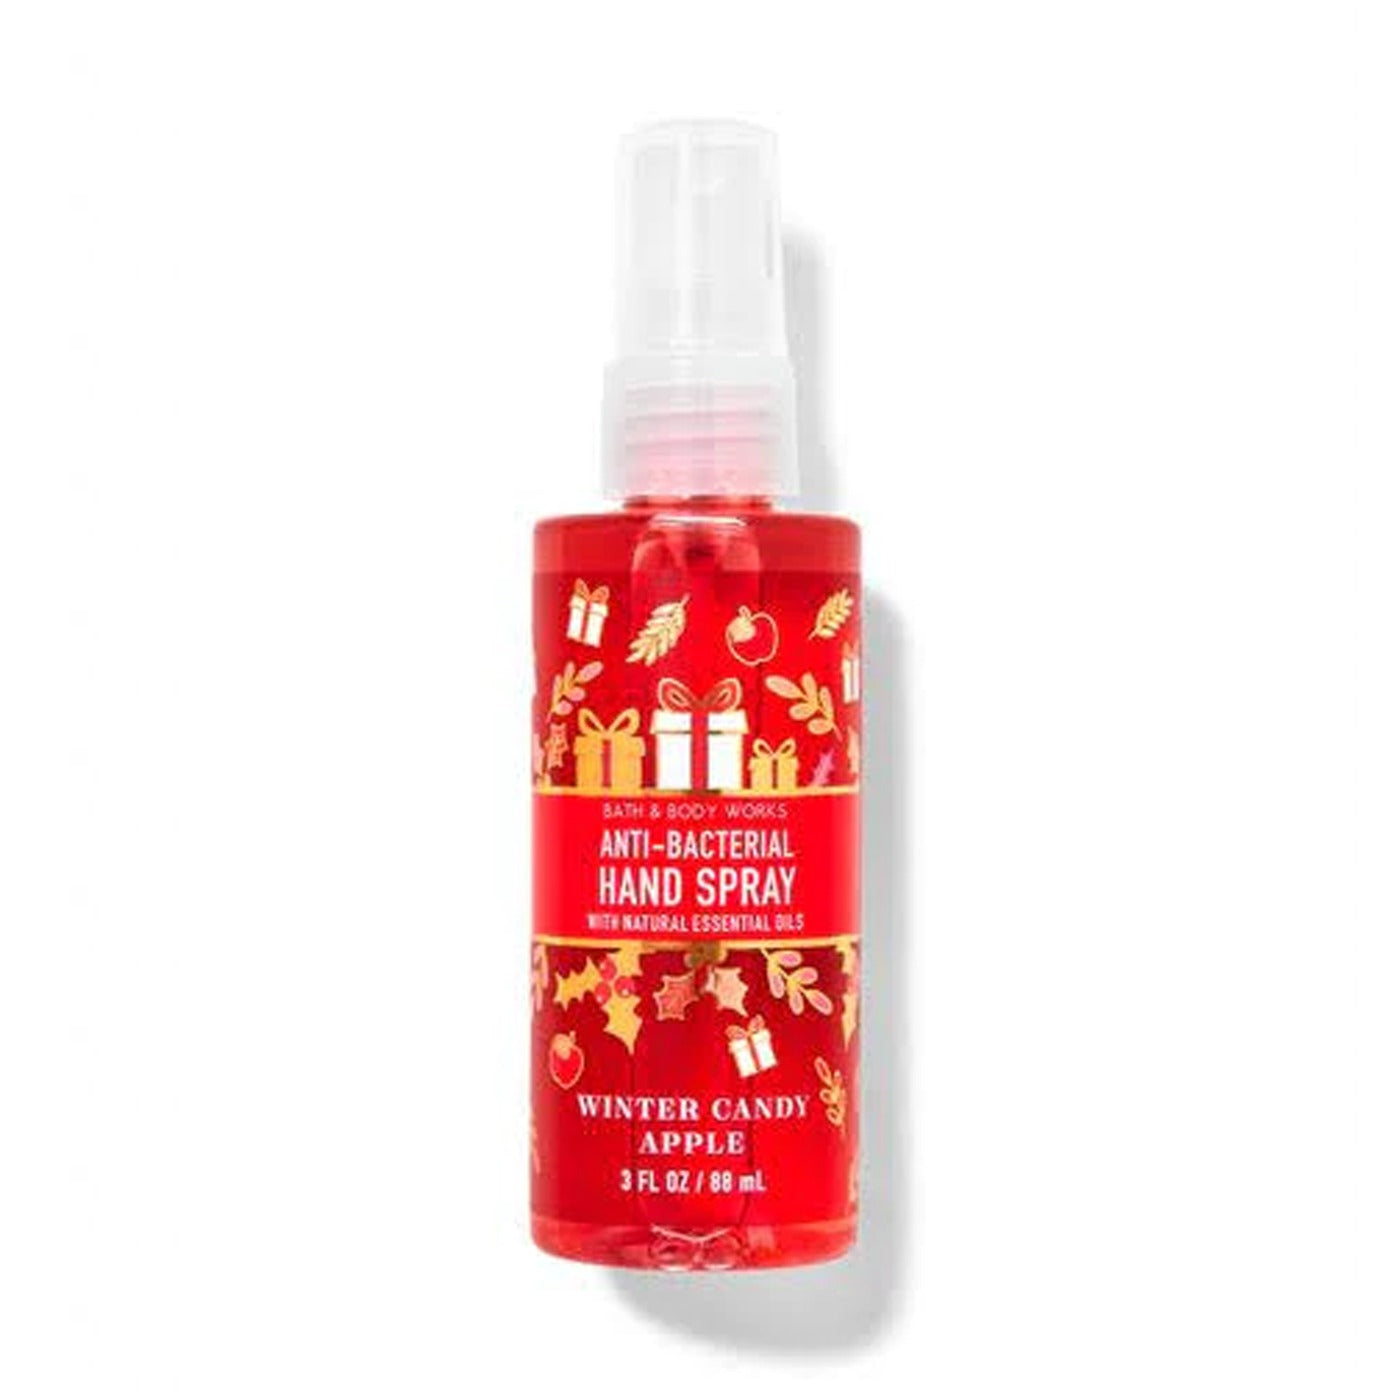 Bath & Body Works Anti-Bacterial Hand Spray Winter Candy Apple 88 ml